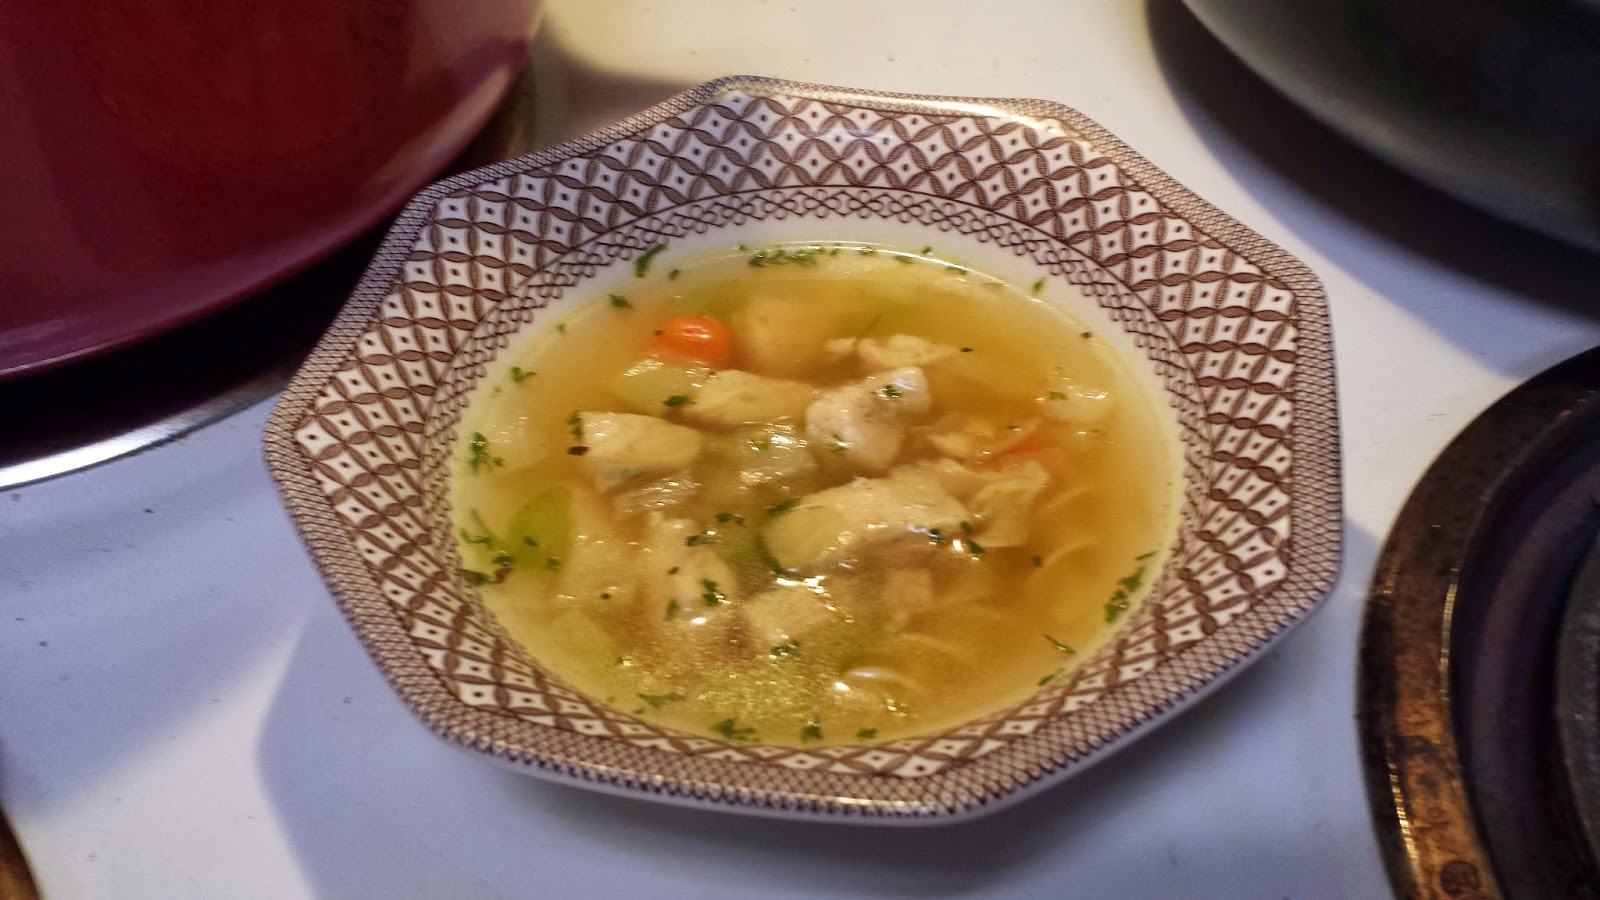 Nana's Chicken Noodle Soup - Three Teas Kitchen